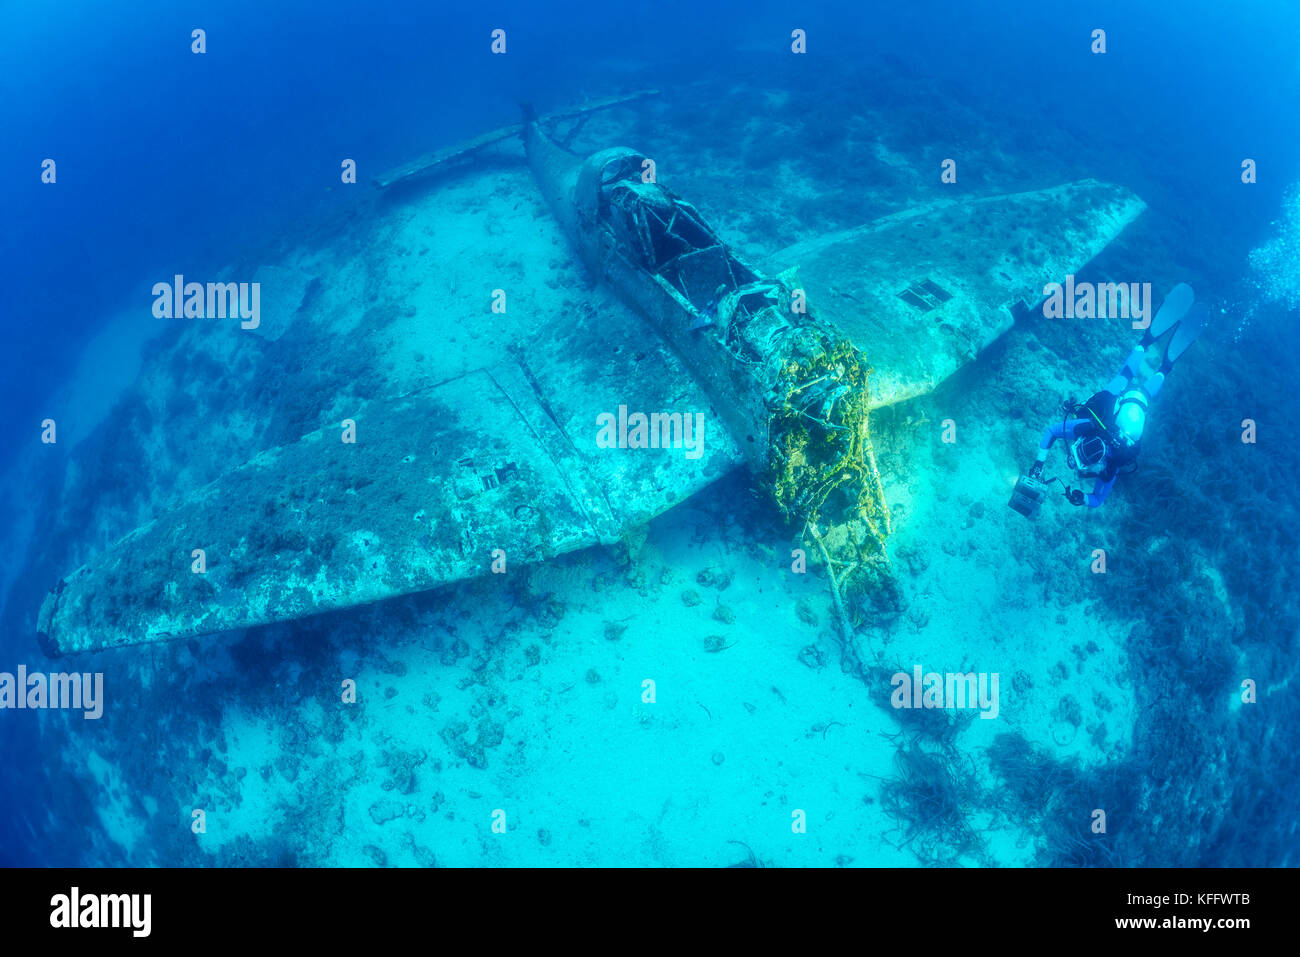 Wreck of a airplane Stuka, from the 2nd world war and scuba diver, Adriatic Sea, Mediterranean Sea, South of Island Zirja, Dalmatia, Croatia Stock Photo